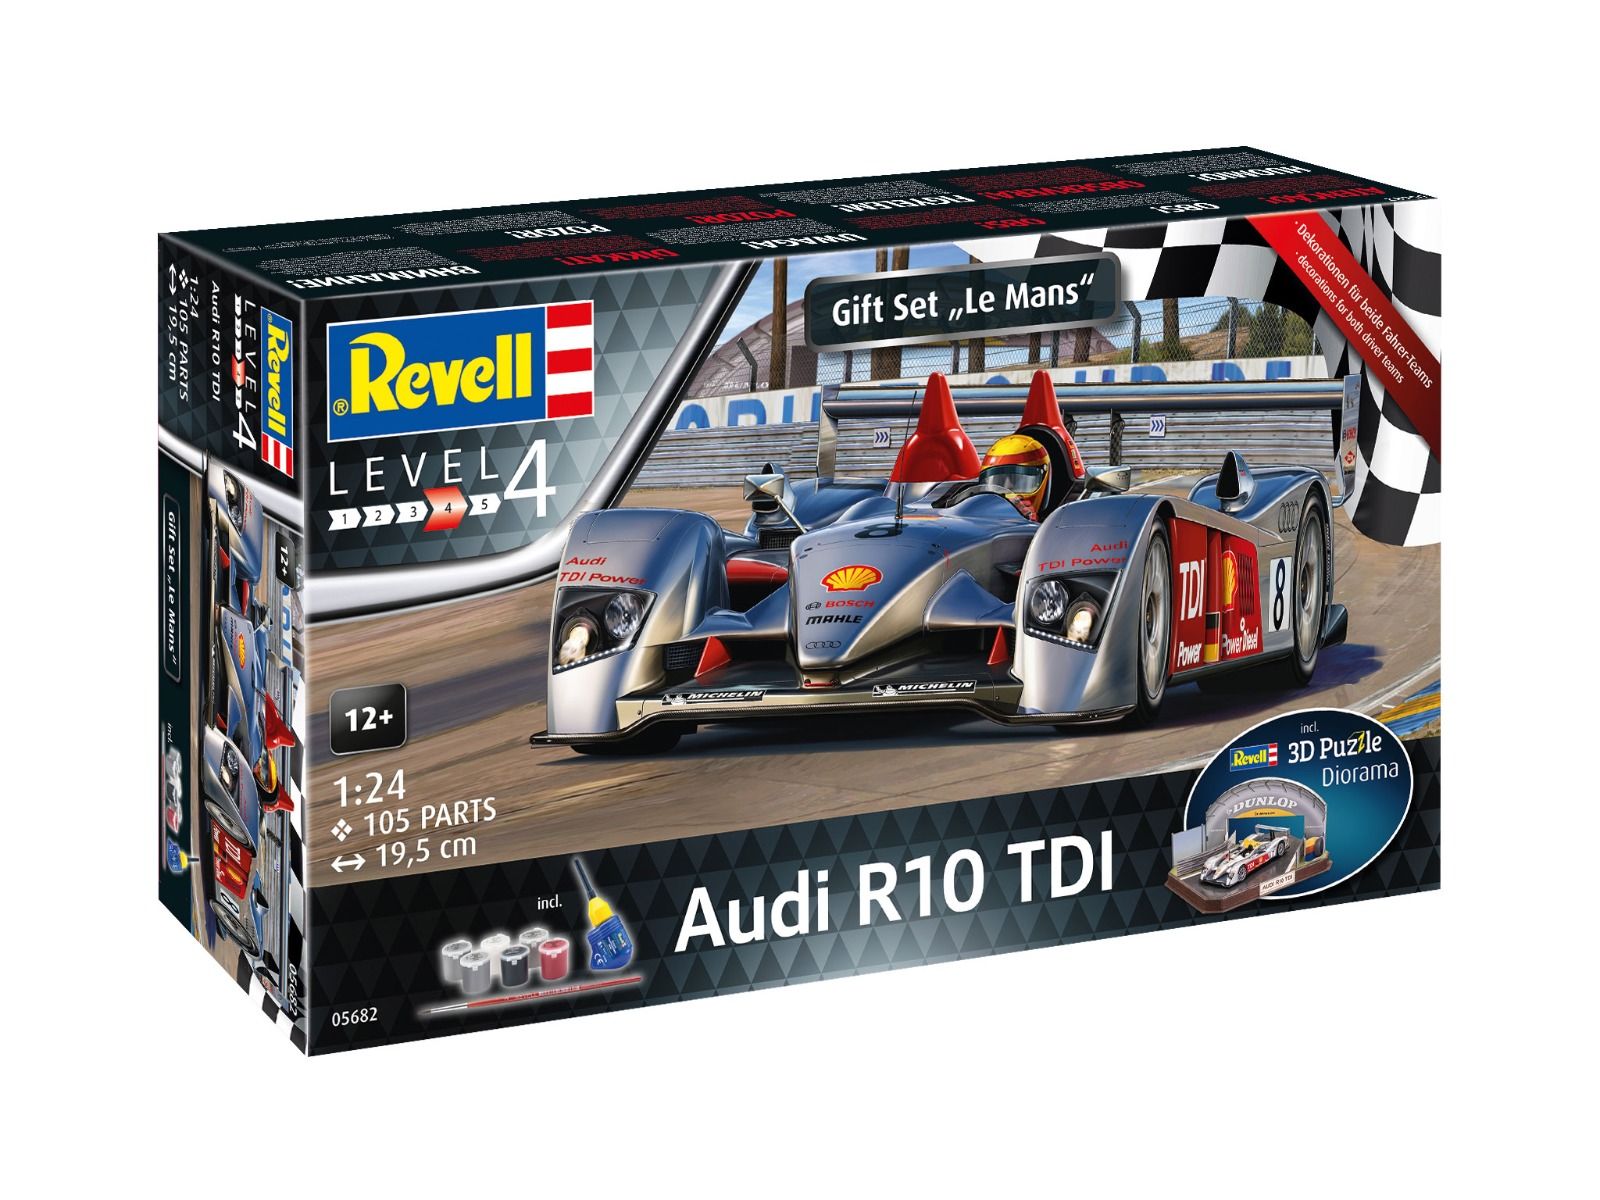 Revell 1/24 Scale Audi R10 TDI Le Mans & 3D Puzzle Model Kit